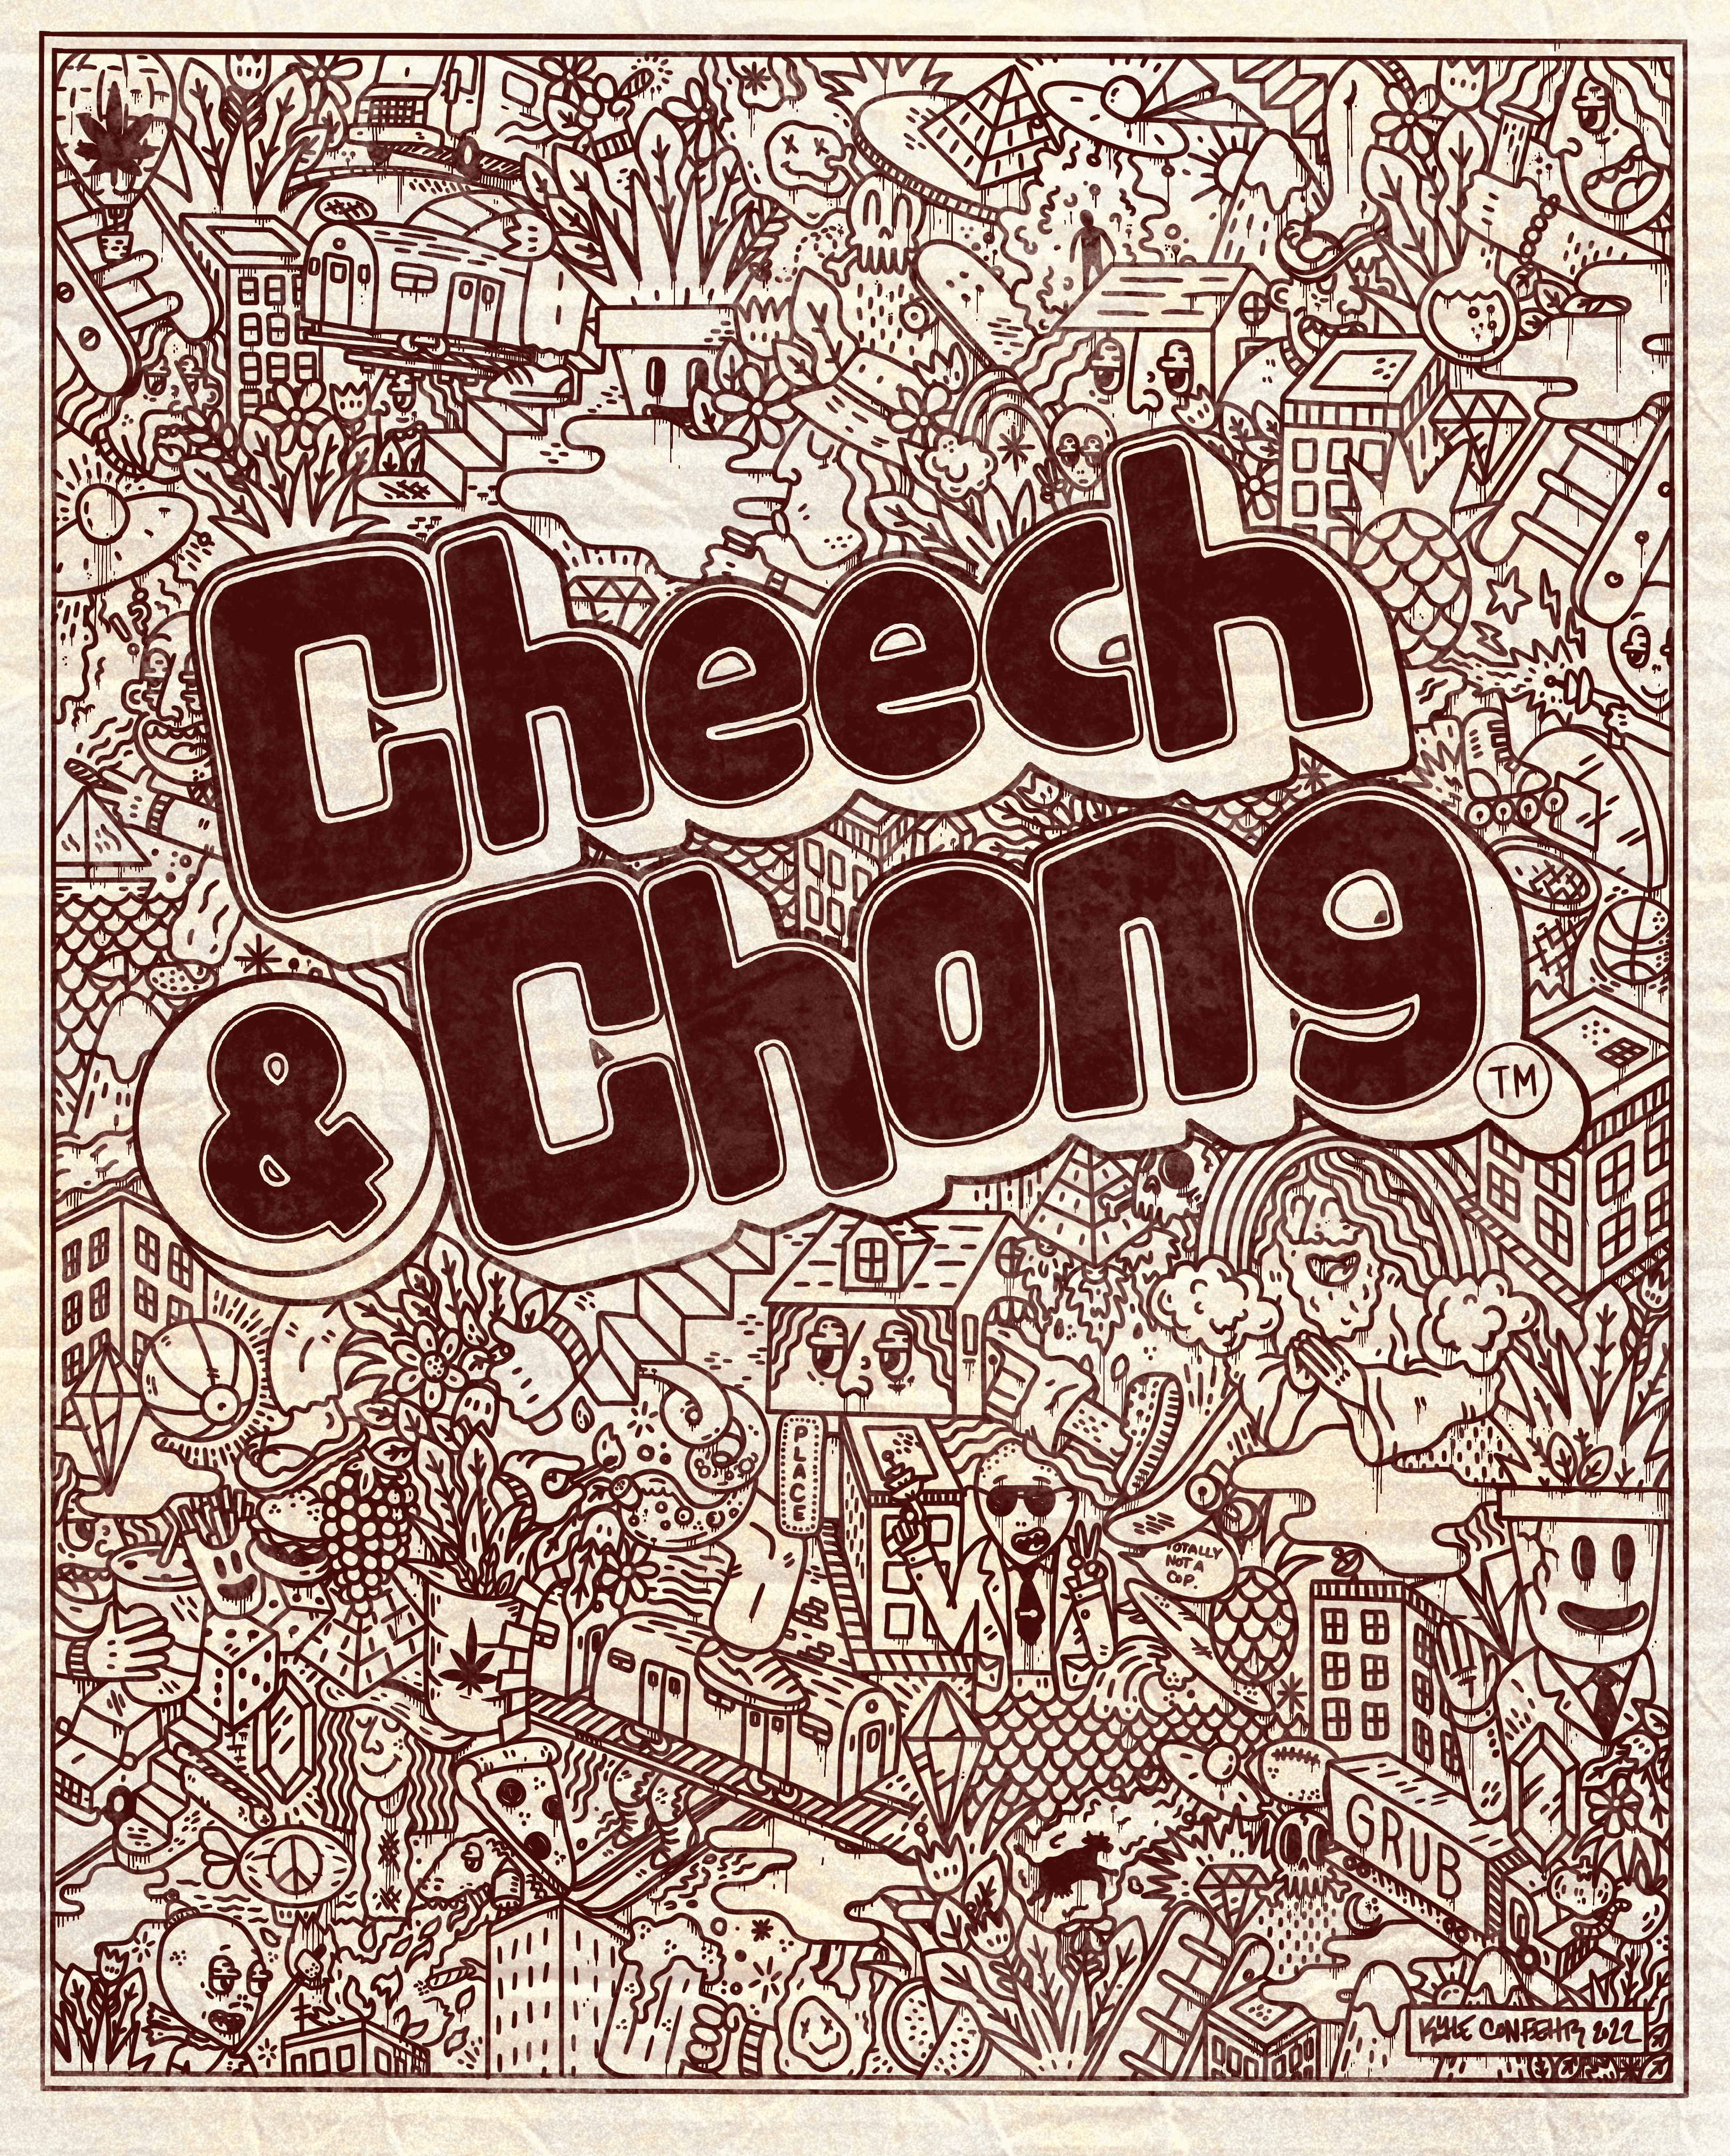 Cheech & Chong: Kyle Confehr - 4/20/22